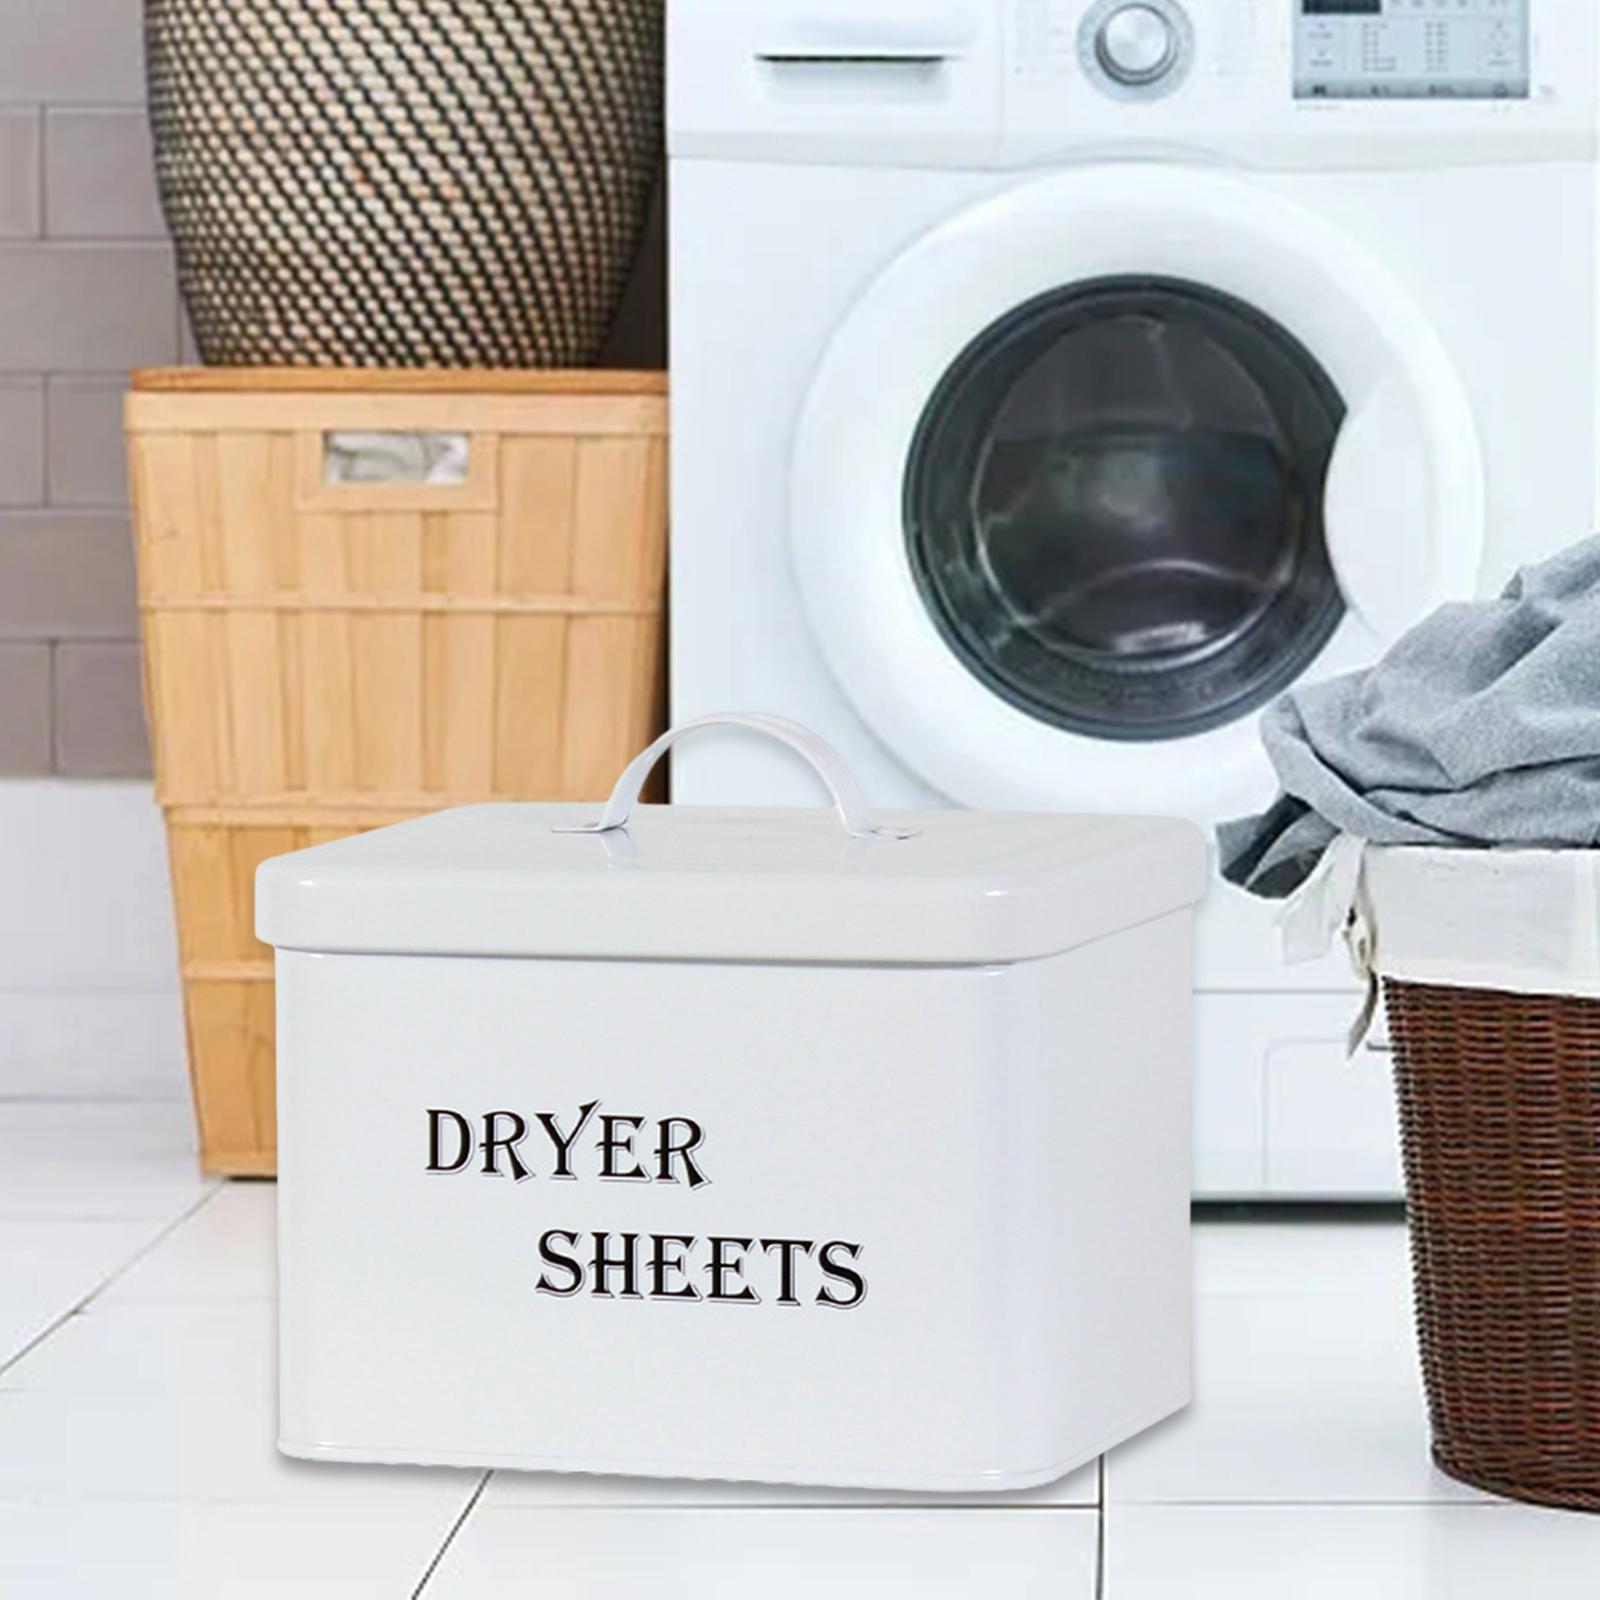 Dryer Sheet Container Dryer Sheet Holder for Home Organization Storage Decor